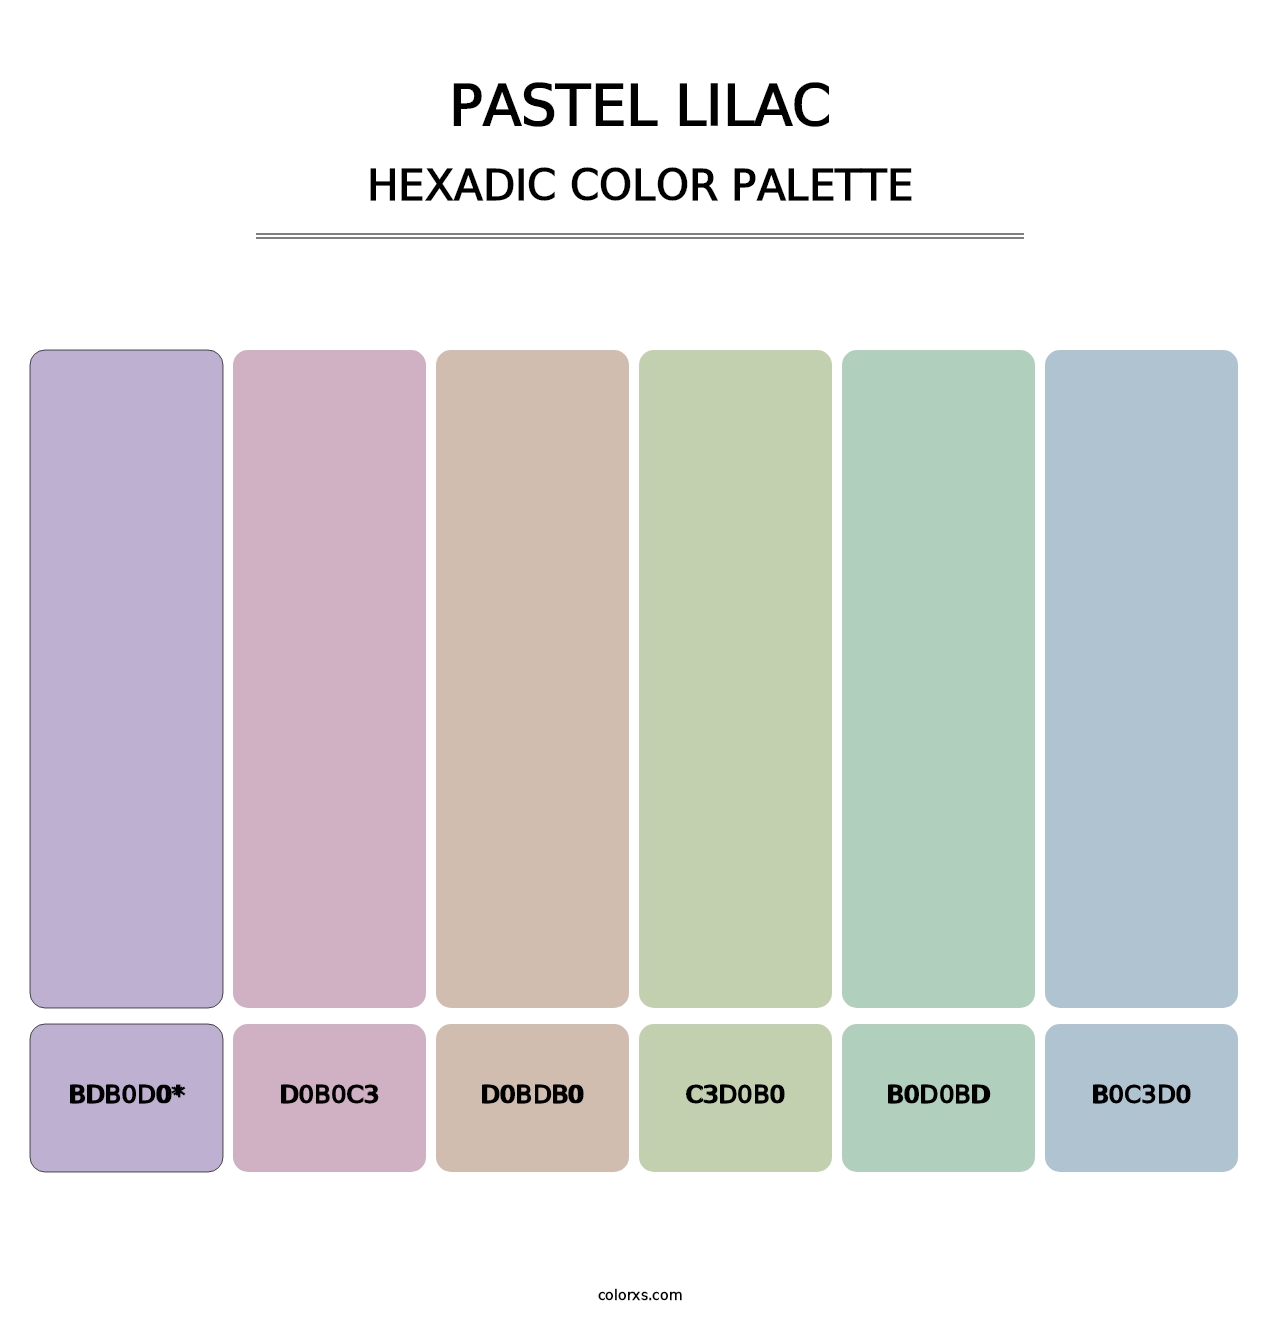 Pastel Lilac - Hexadic Color Palette